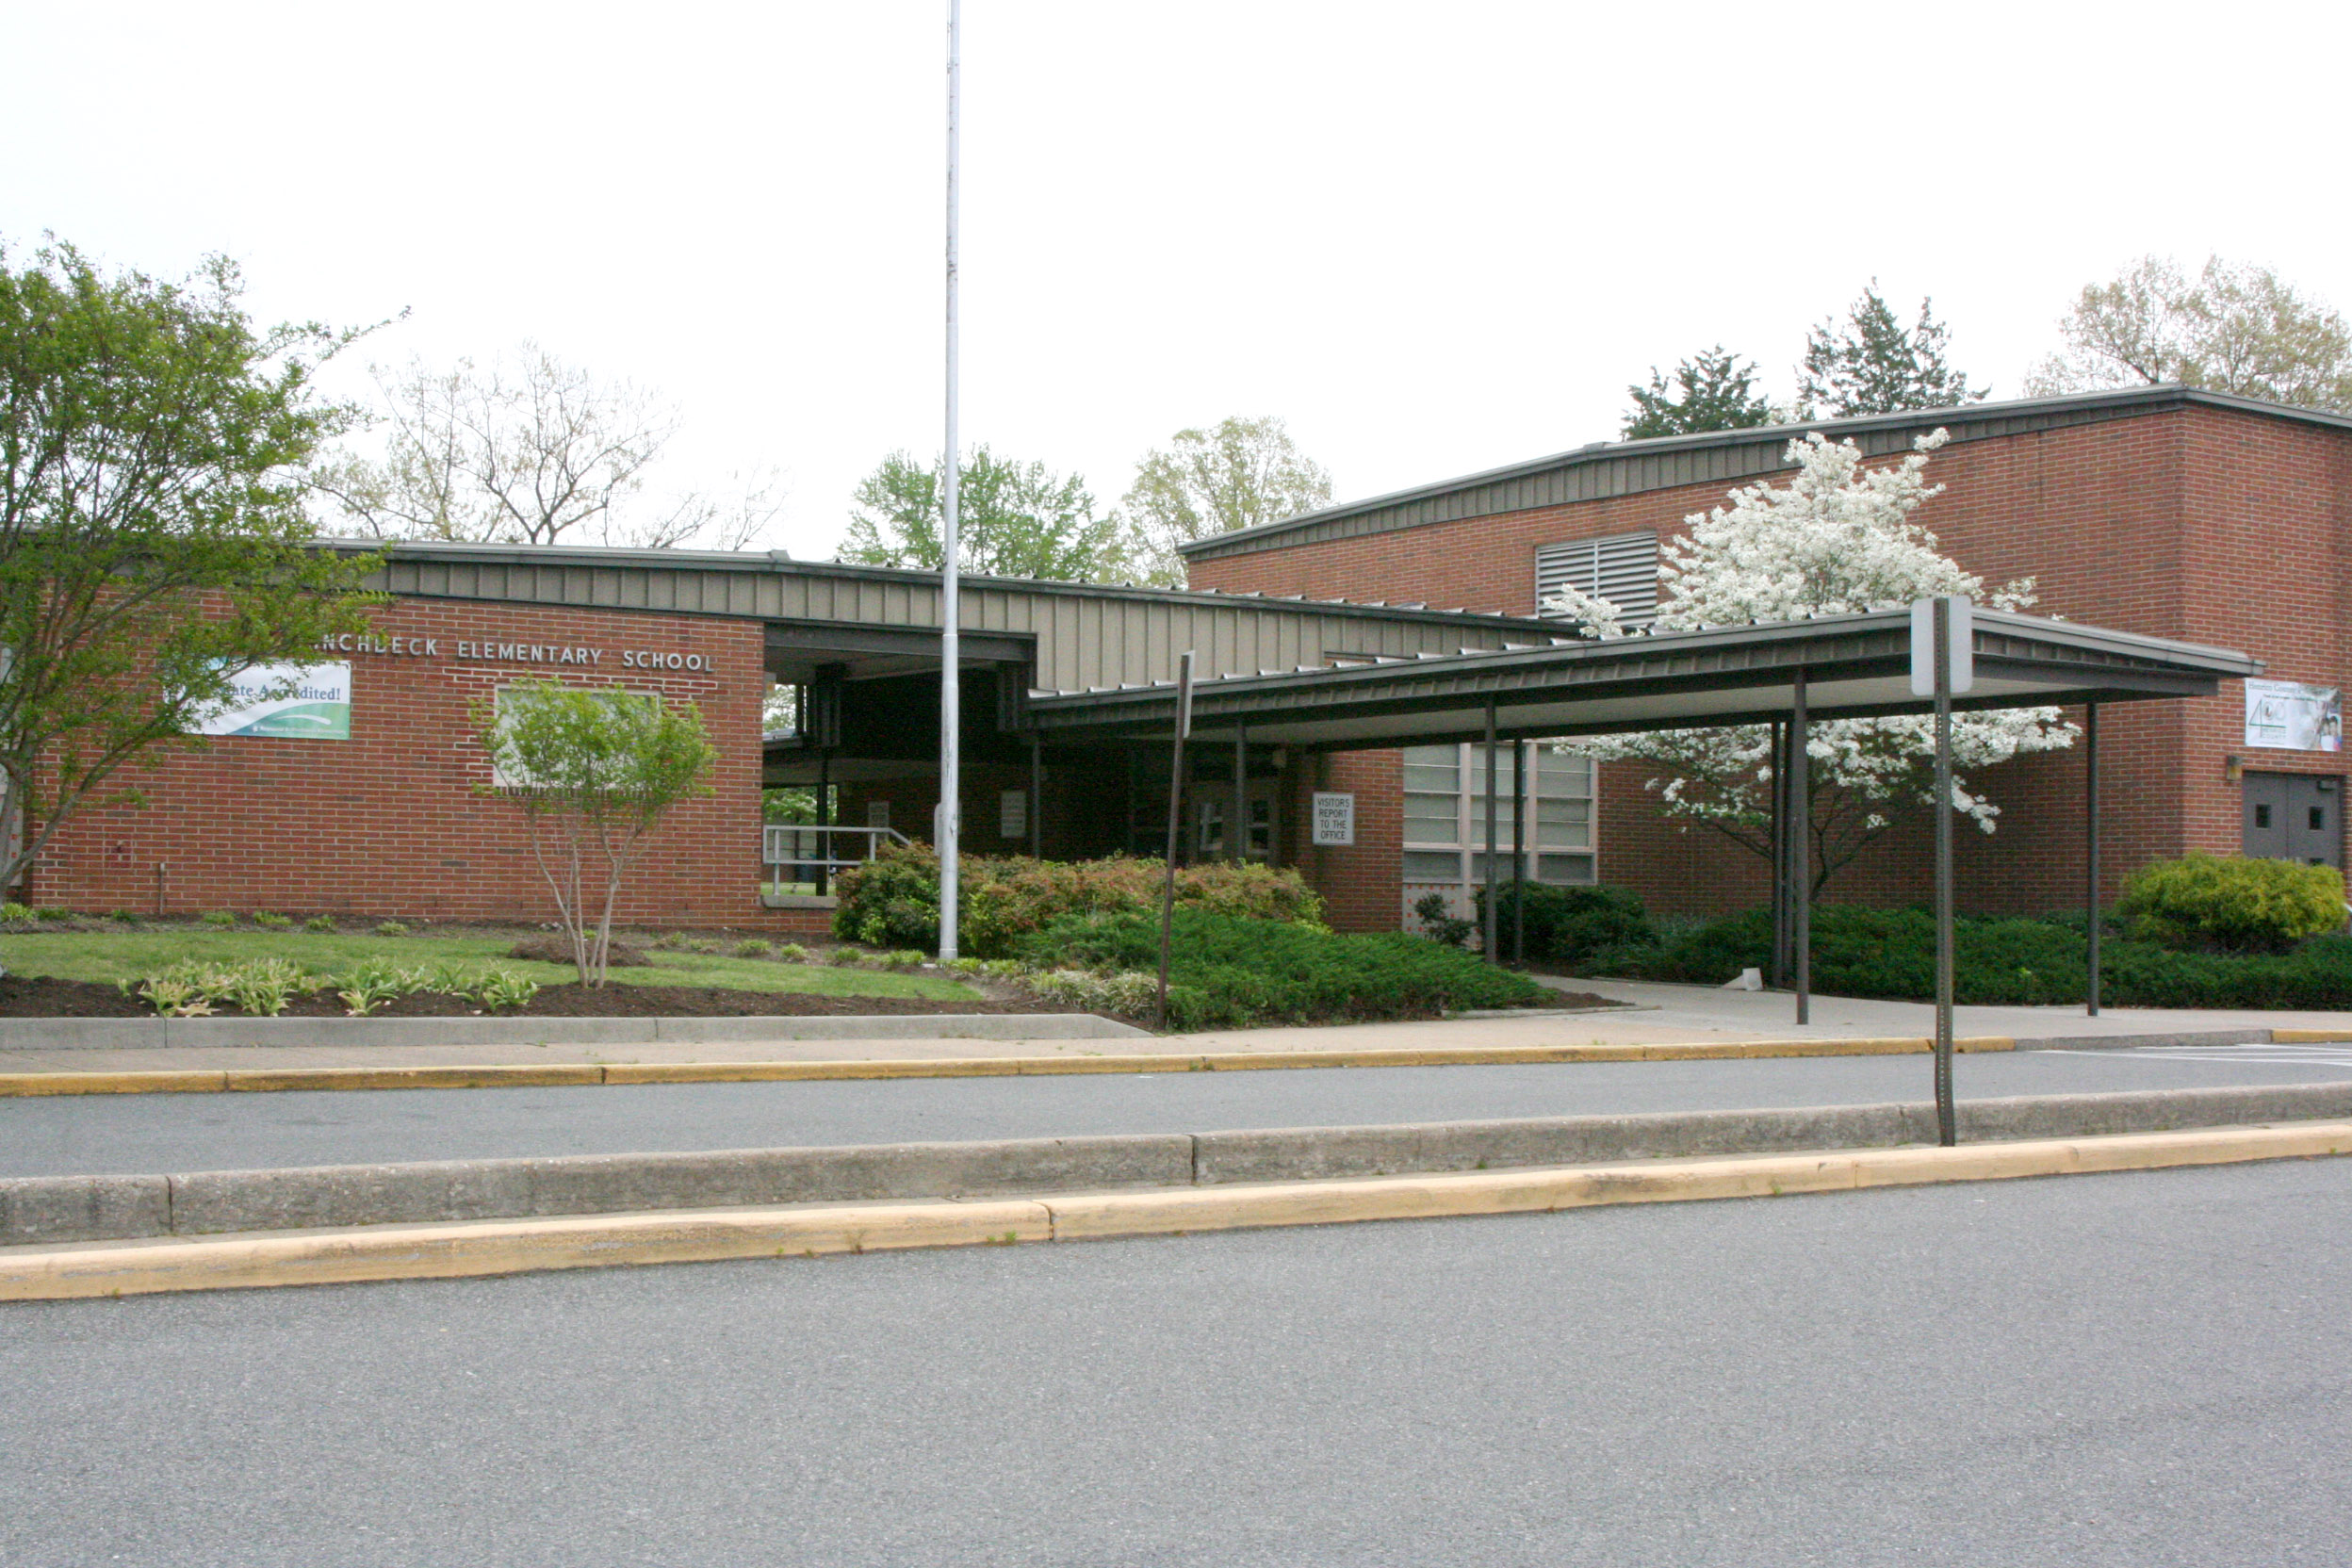 Pinchbeck Elementary exterior